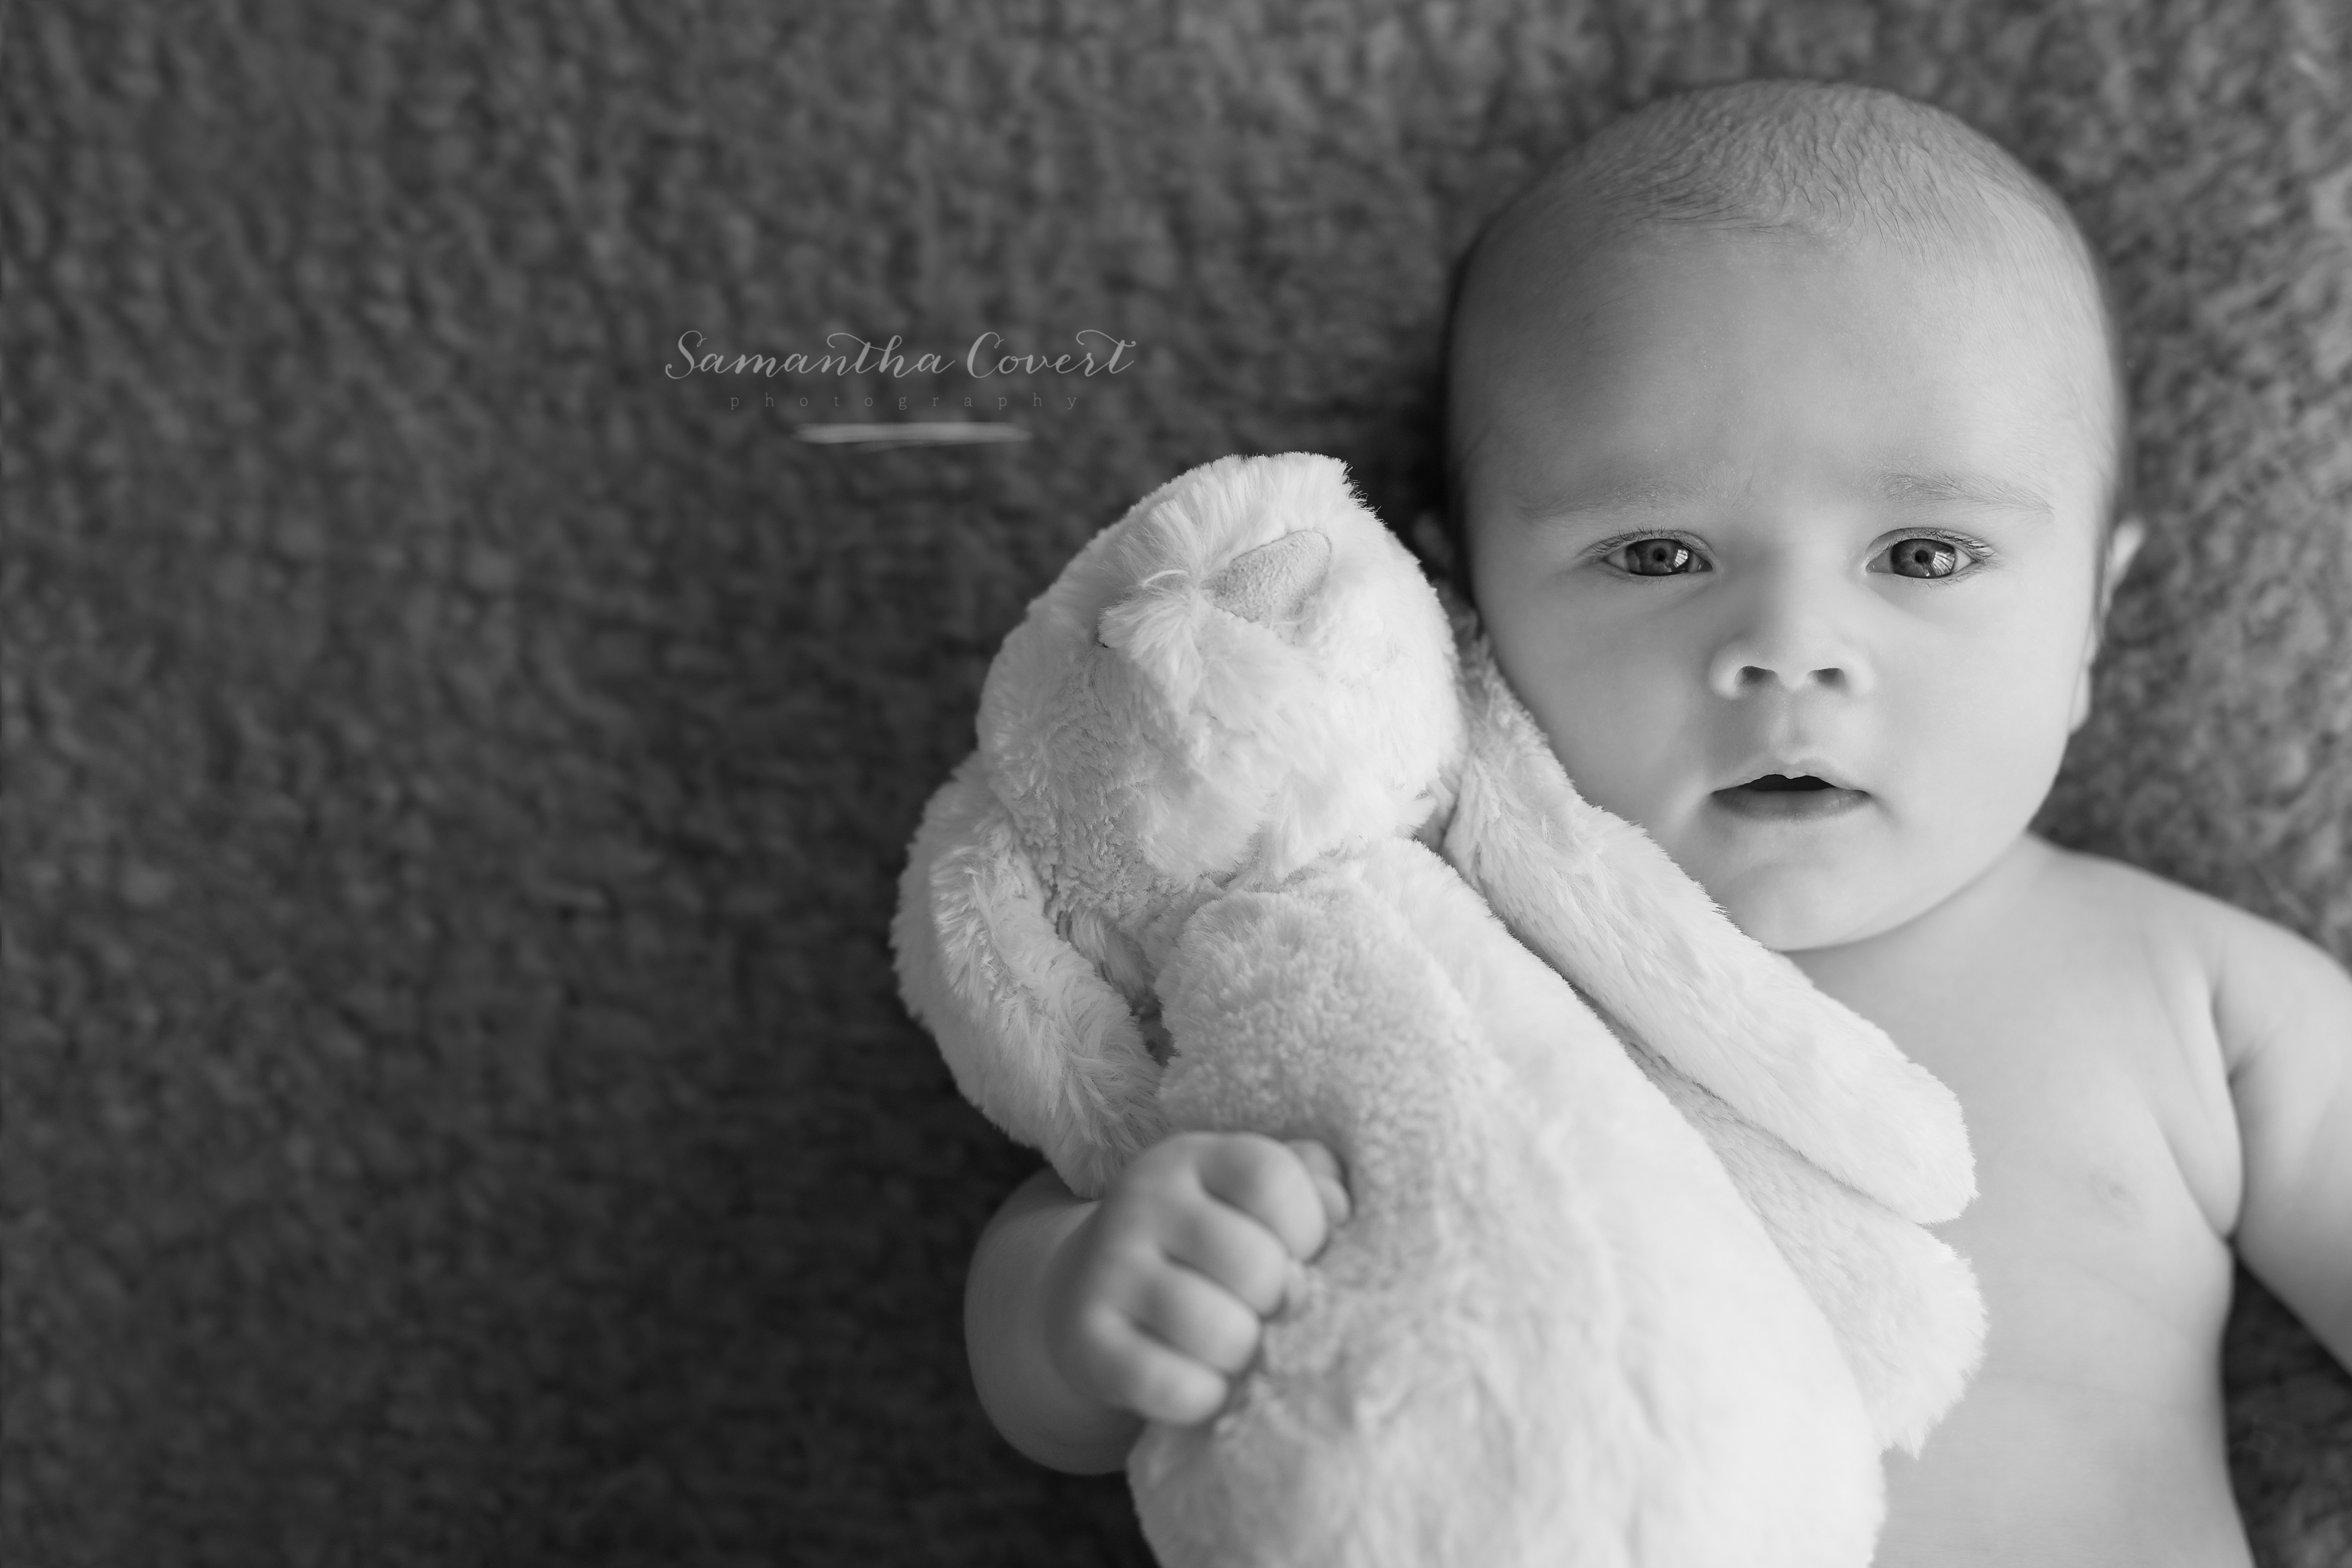 Samantha Covert Photography | Halifax, N.S. Newborn and Family Photographer